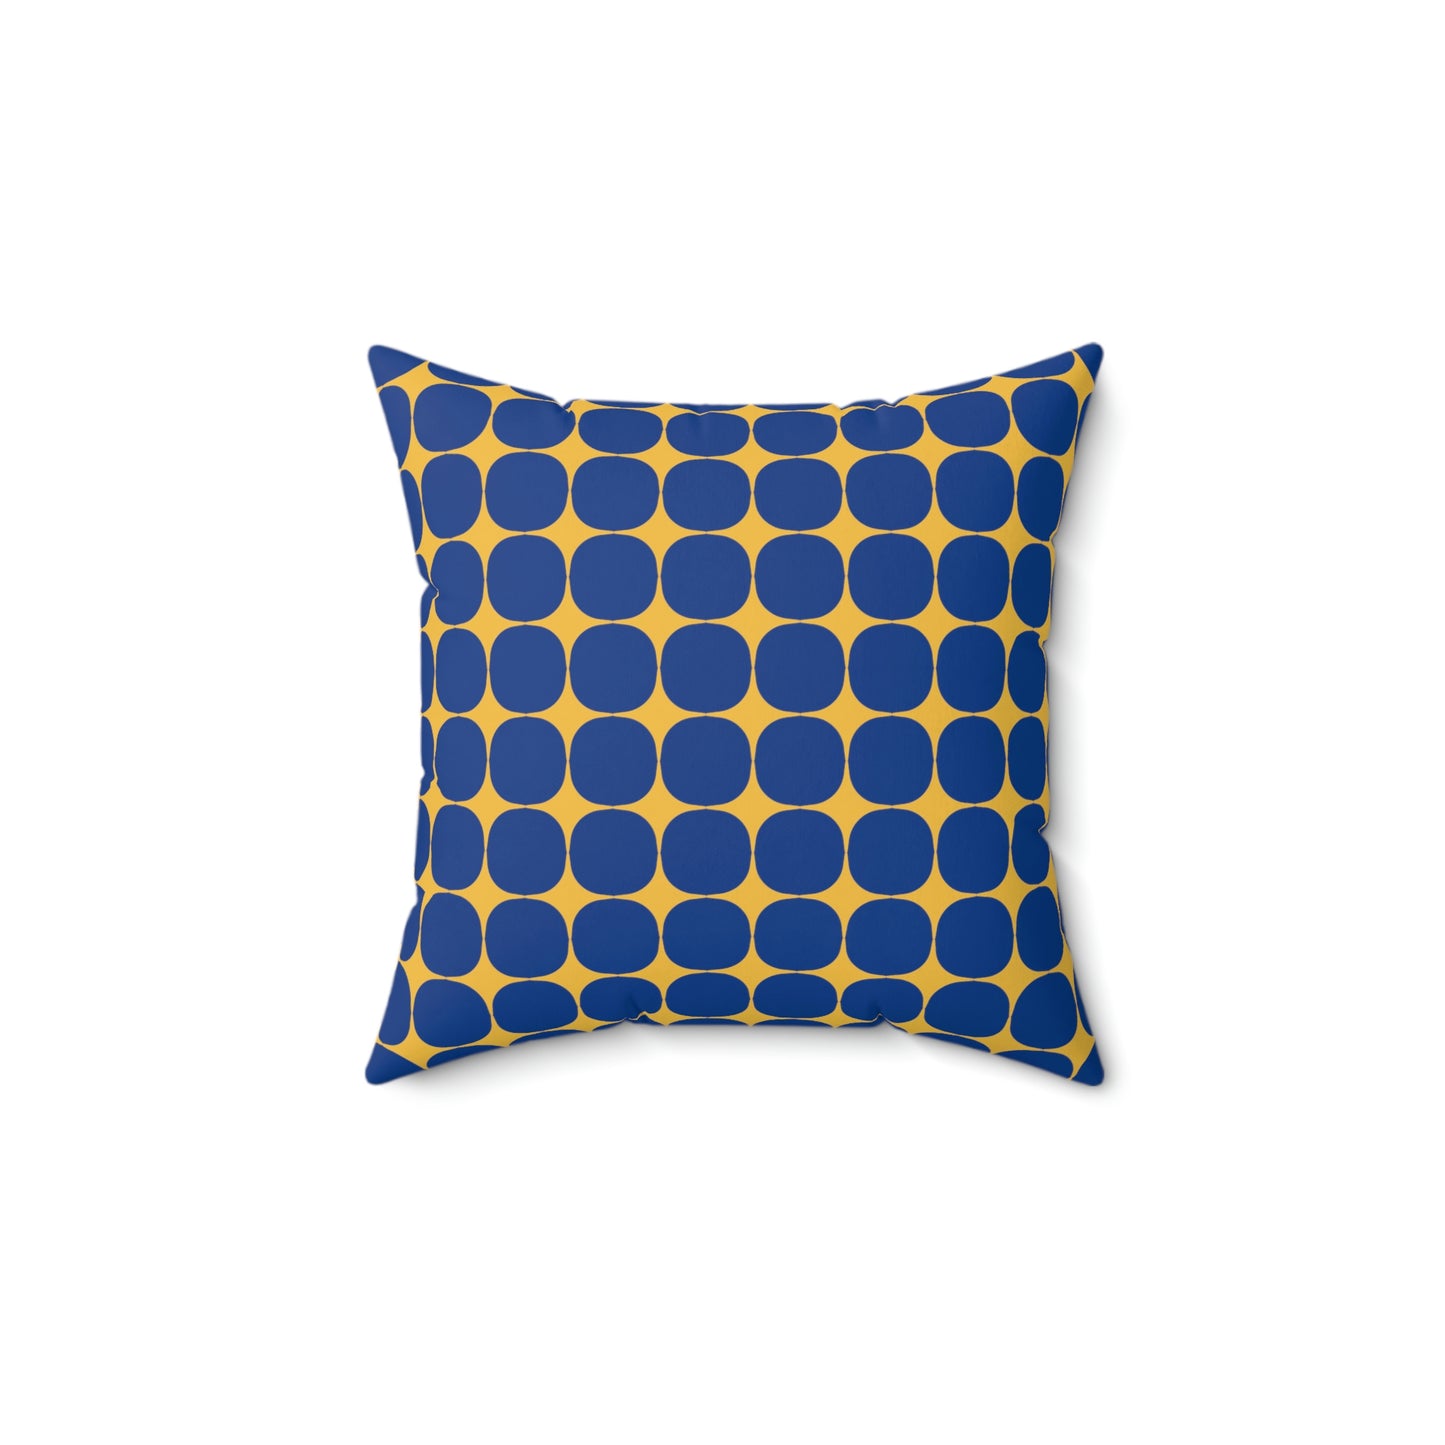 Spun Polyester Square Pillow Case “Rhombus Star on Dark Blue”